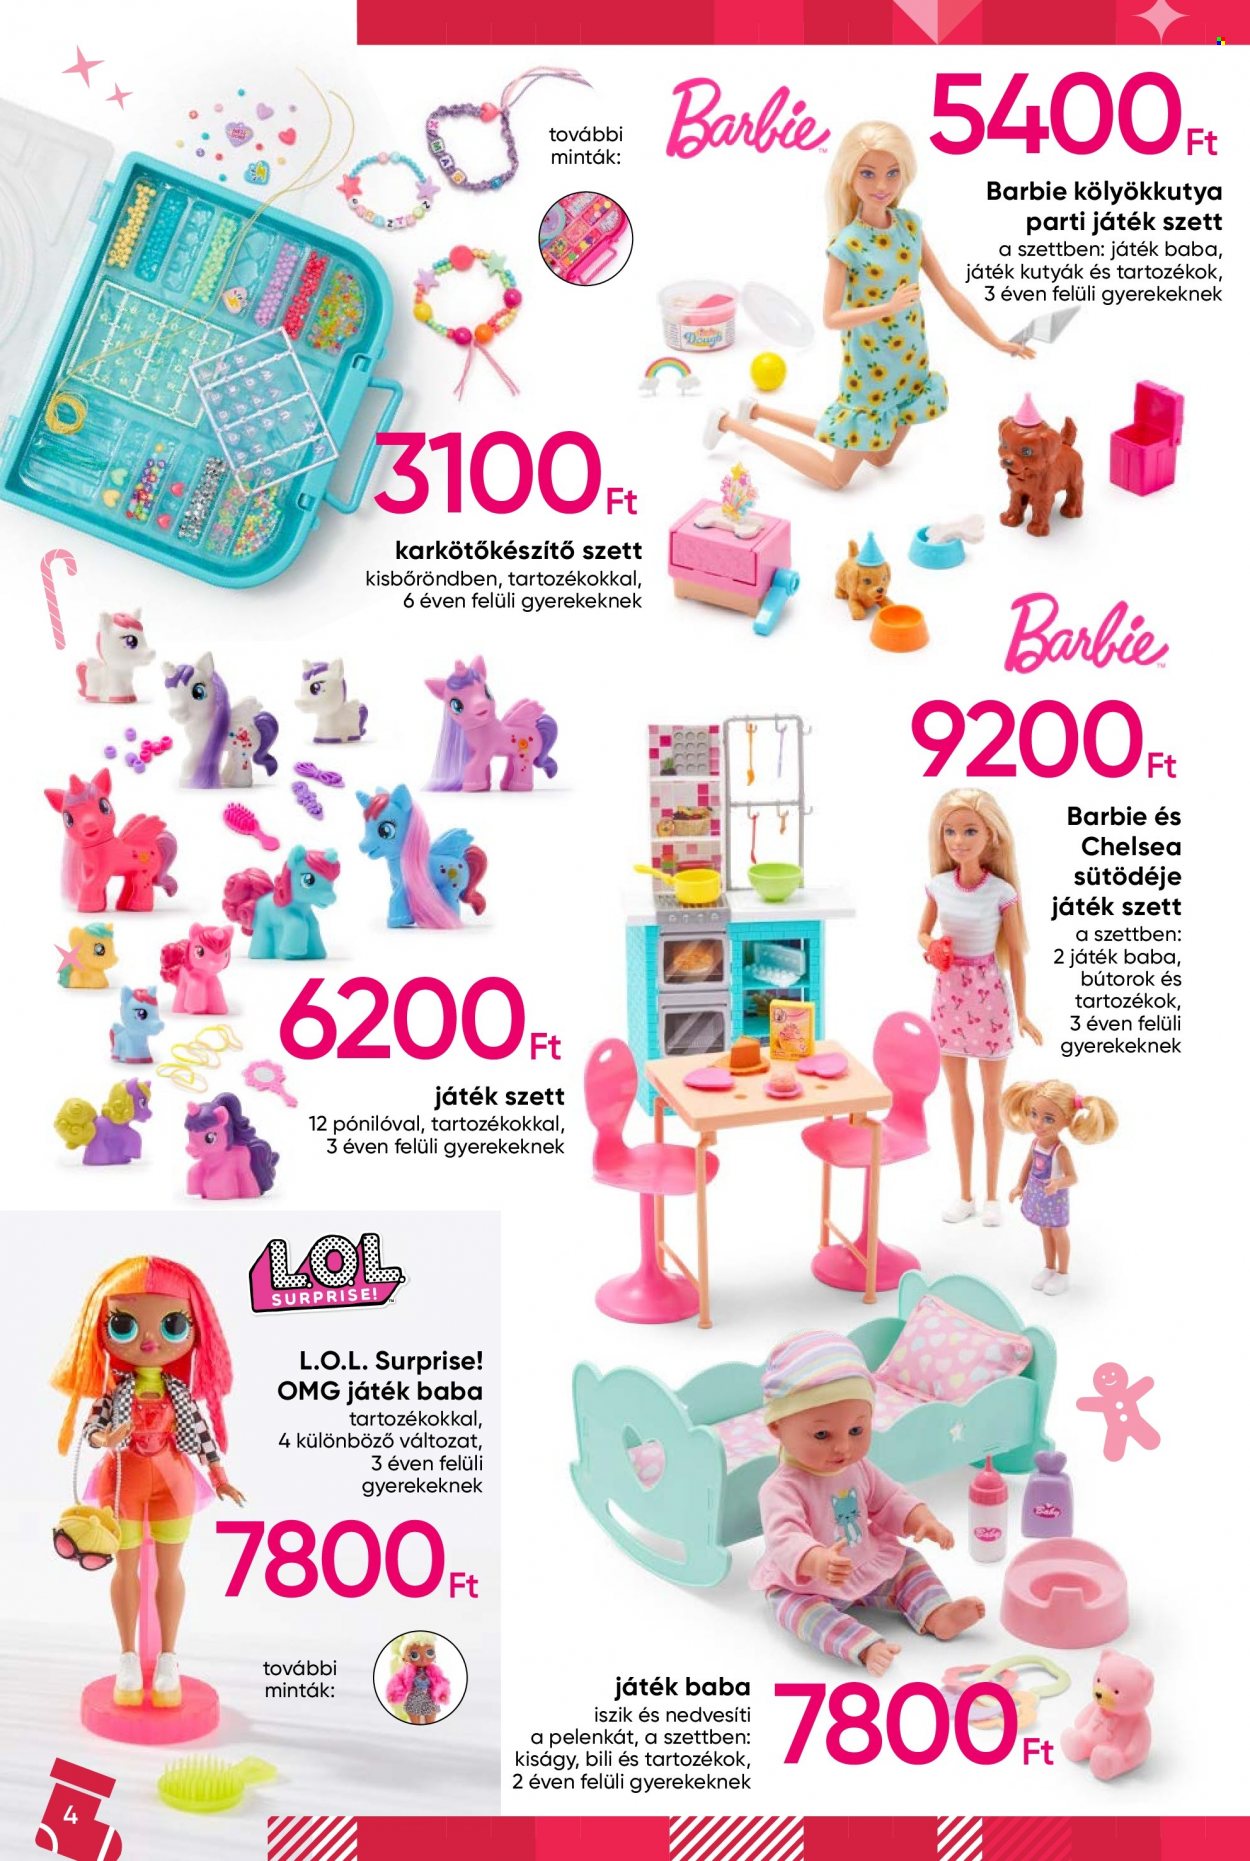 thumbnail - Pepco akciós újsága  - 2022.11.03 - 2022.12.31 - Akciós termékek - Barbie, l.o.l. surprise, játék.  4. Oldal